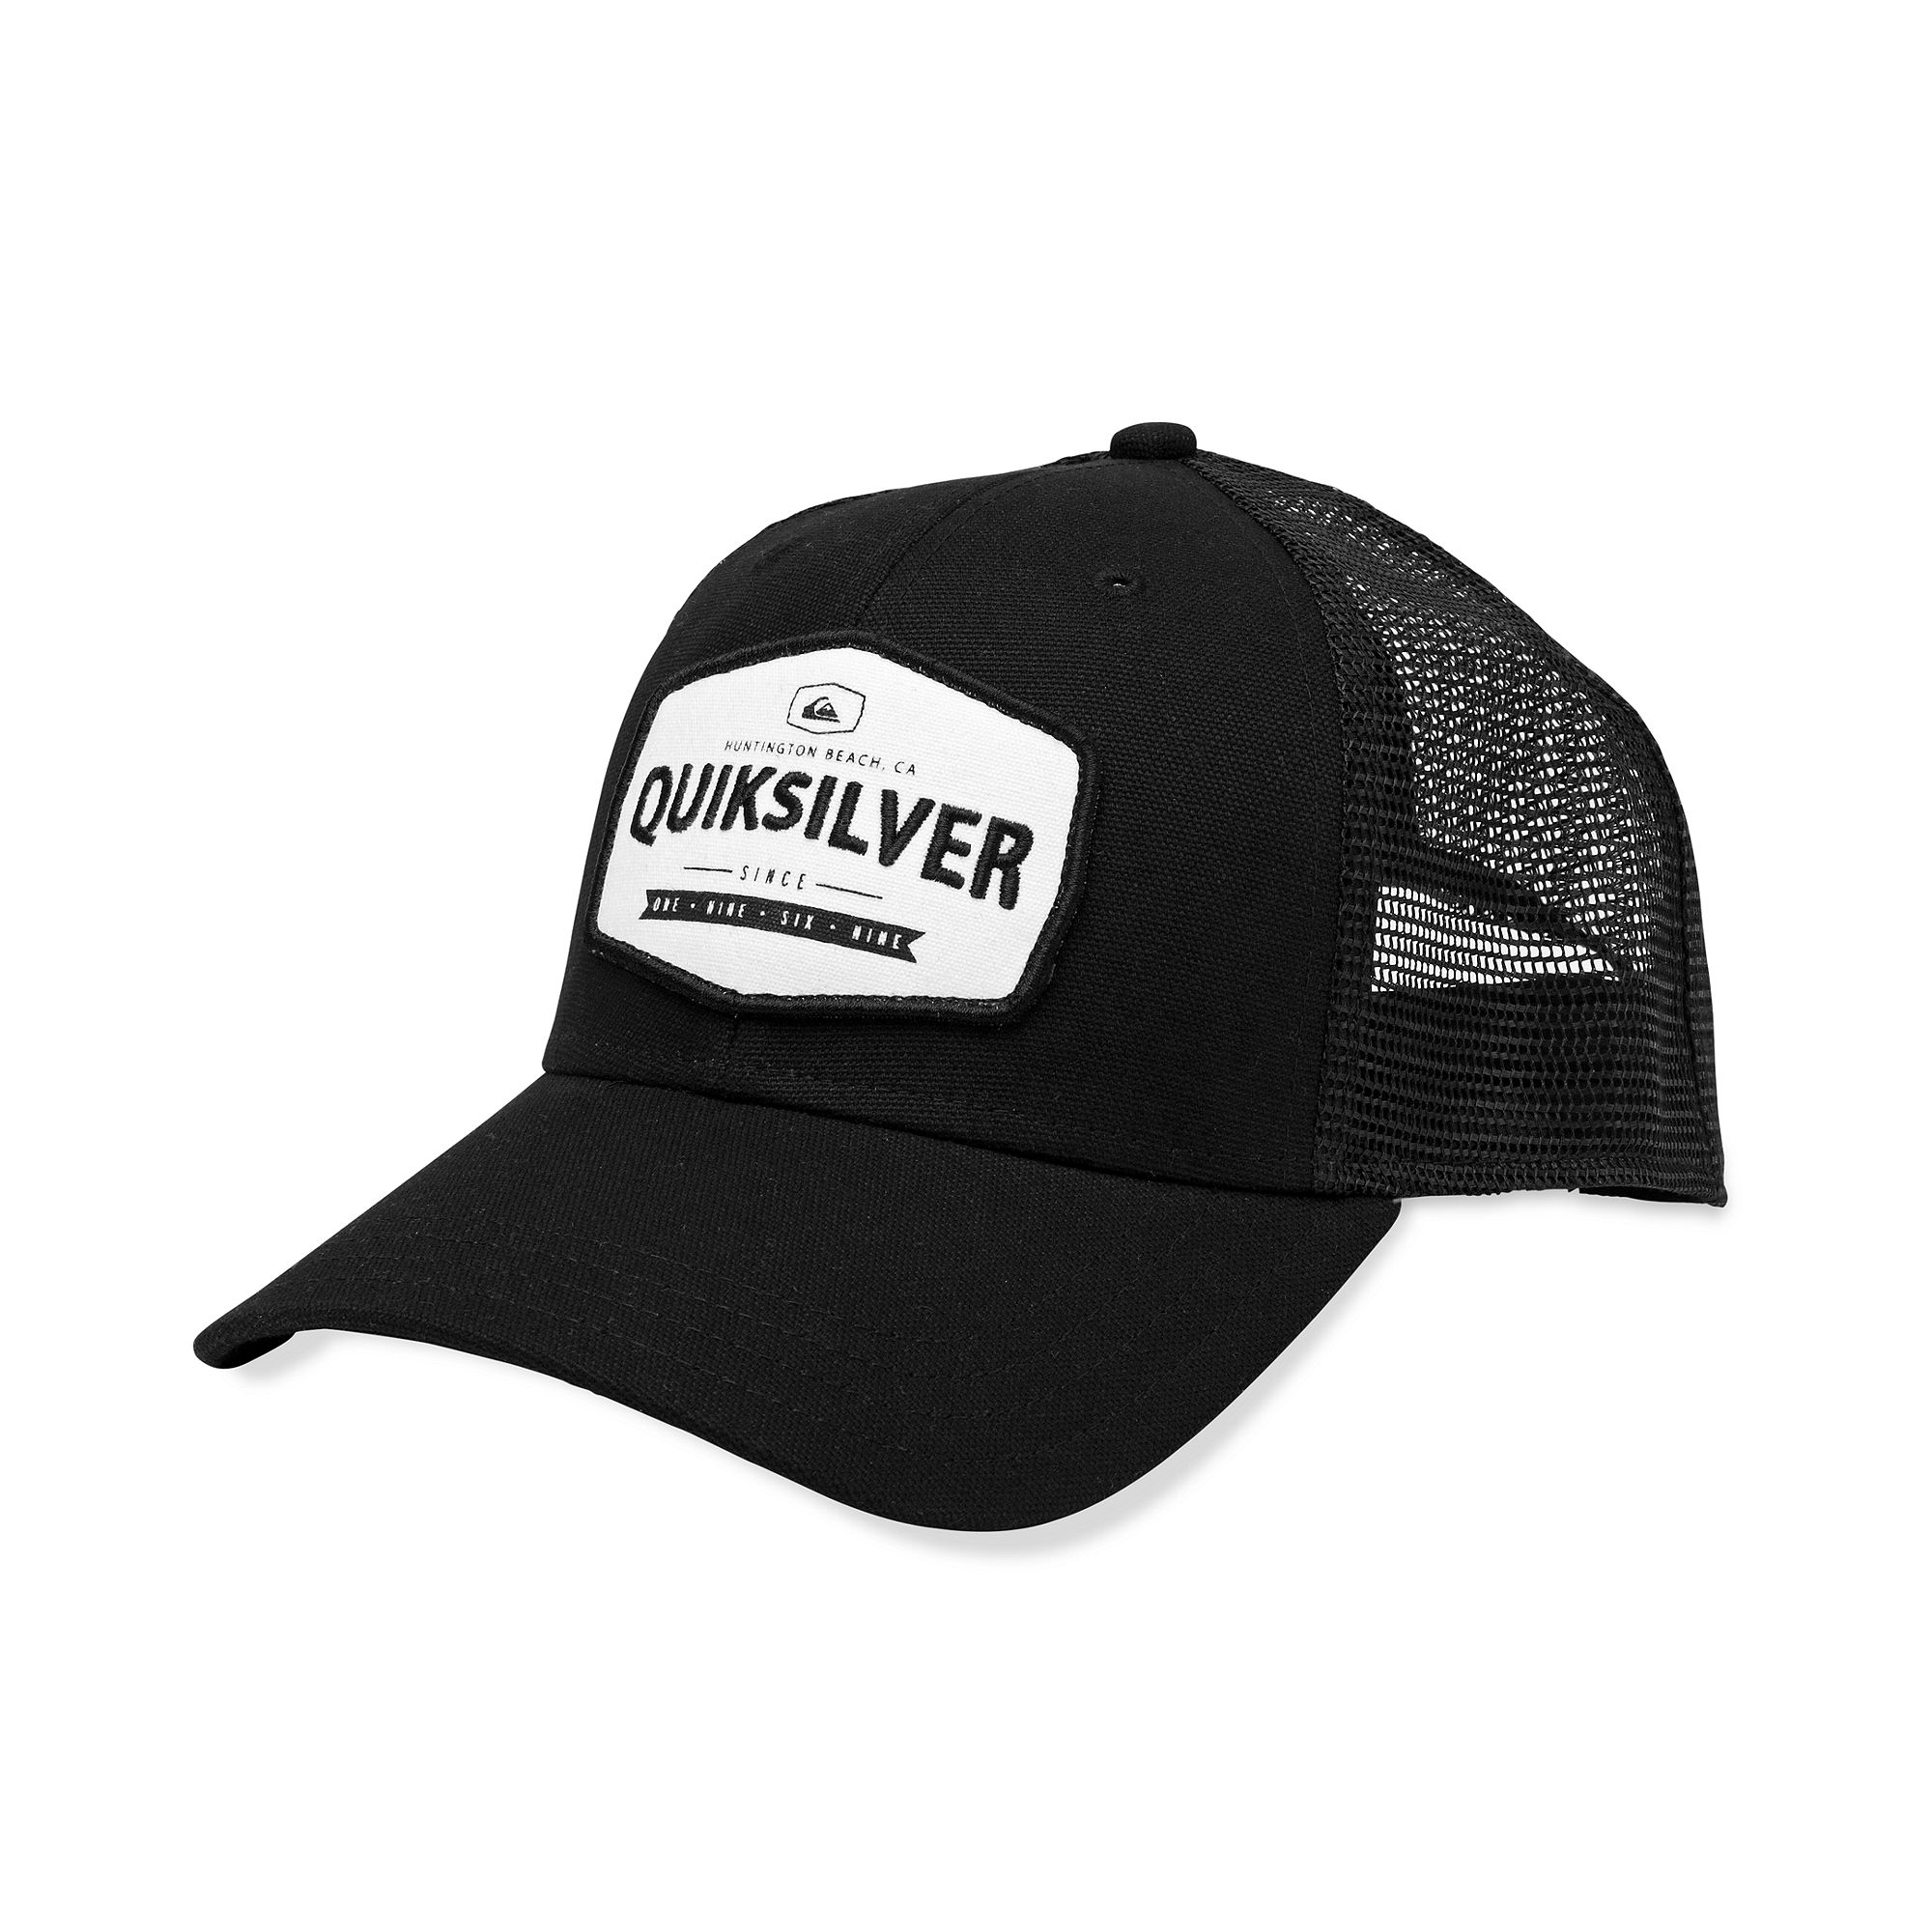 Lyst - Quiksilver Please Hold Patch Trucker Hat in Black for Men